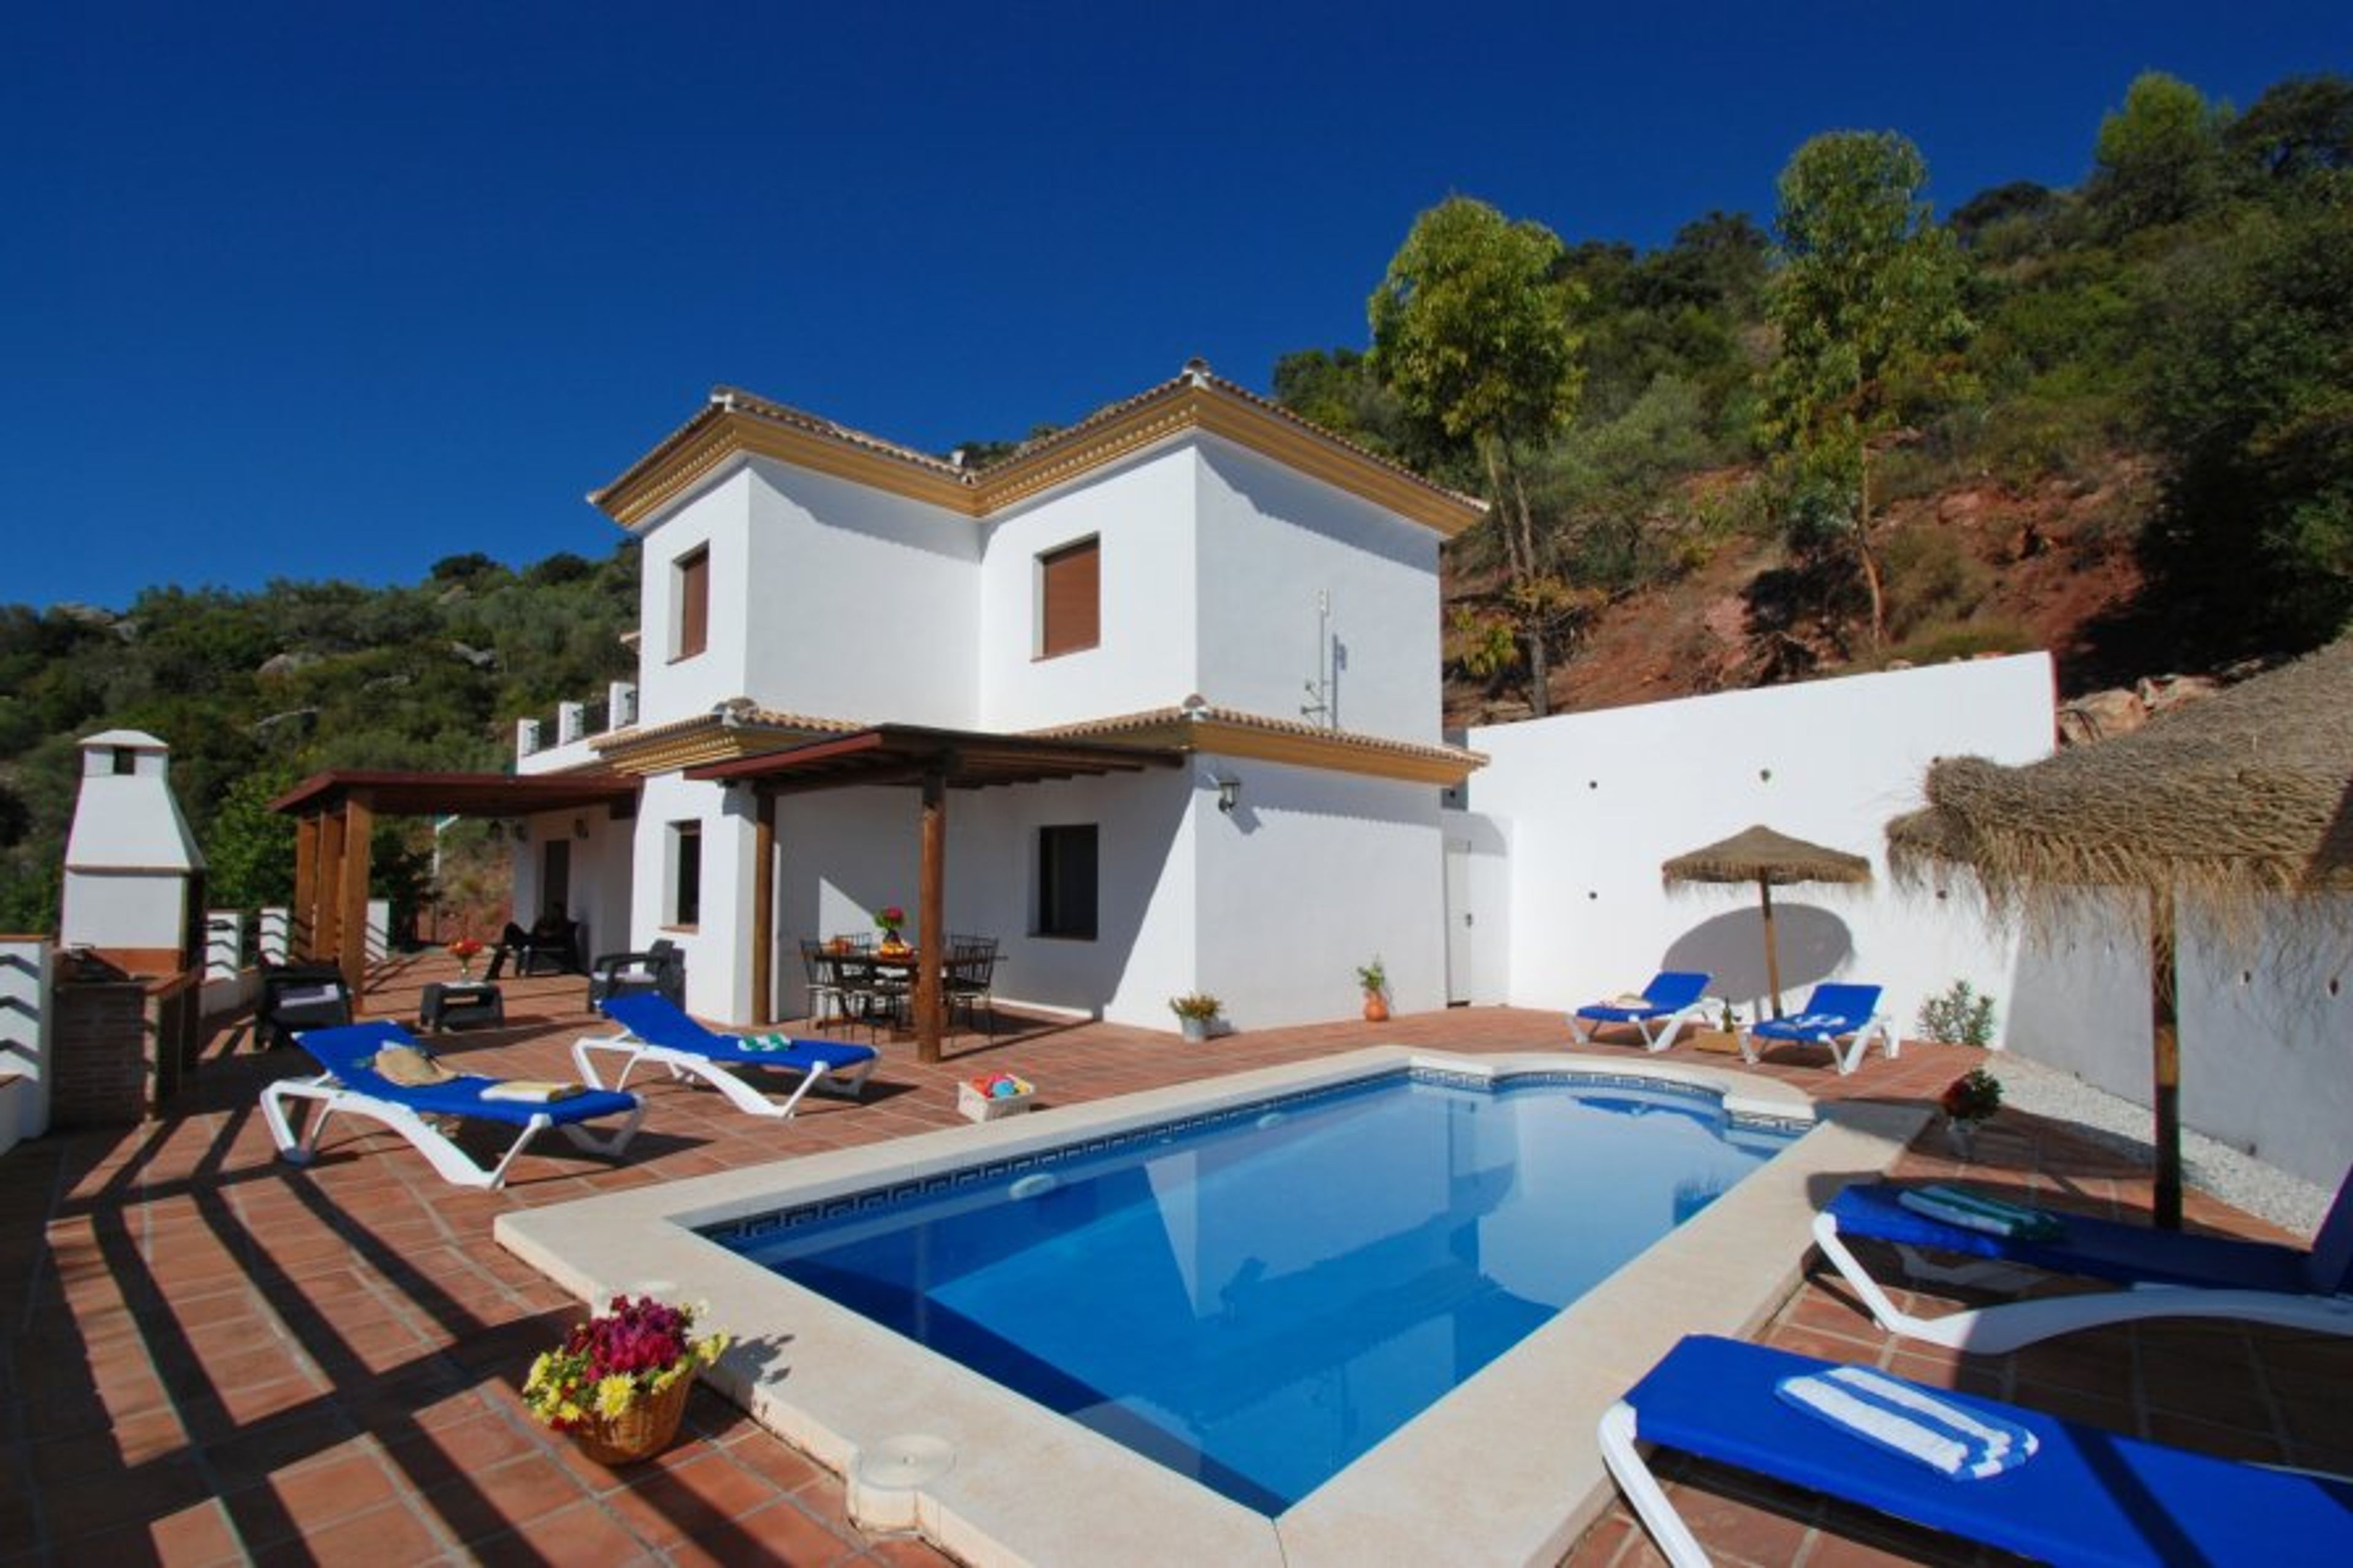 Villa, pool, terraces and views!